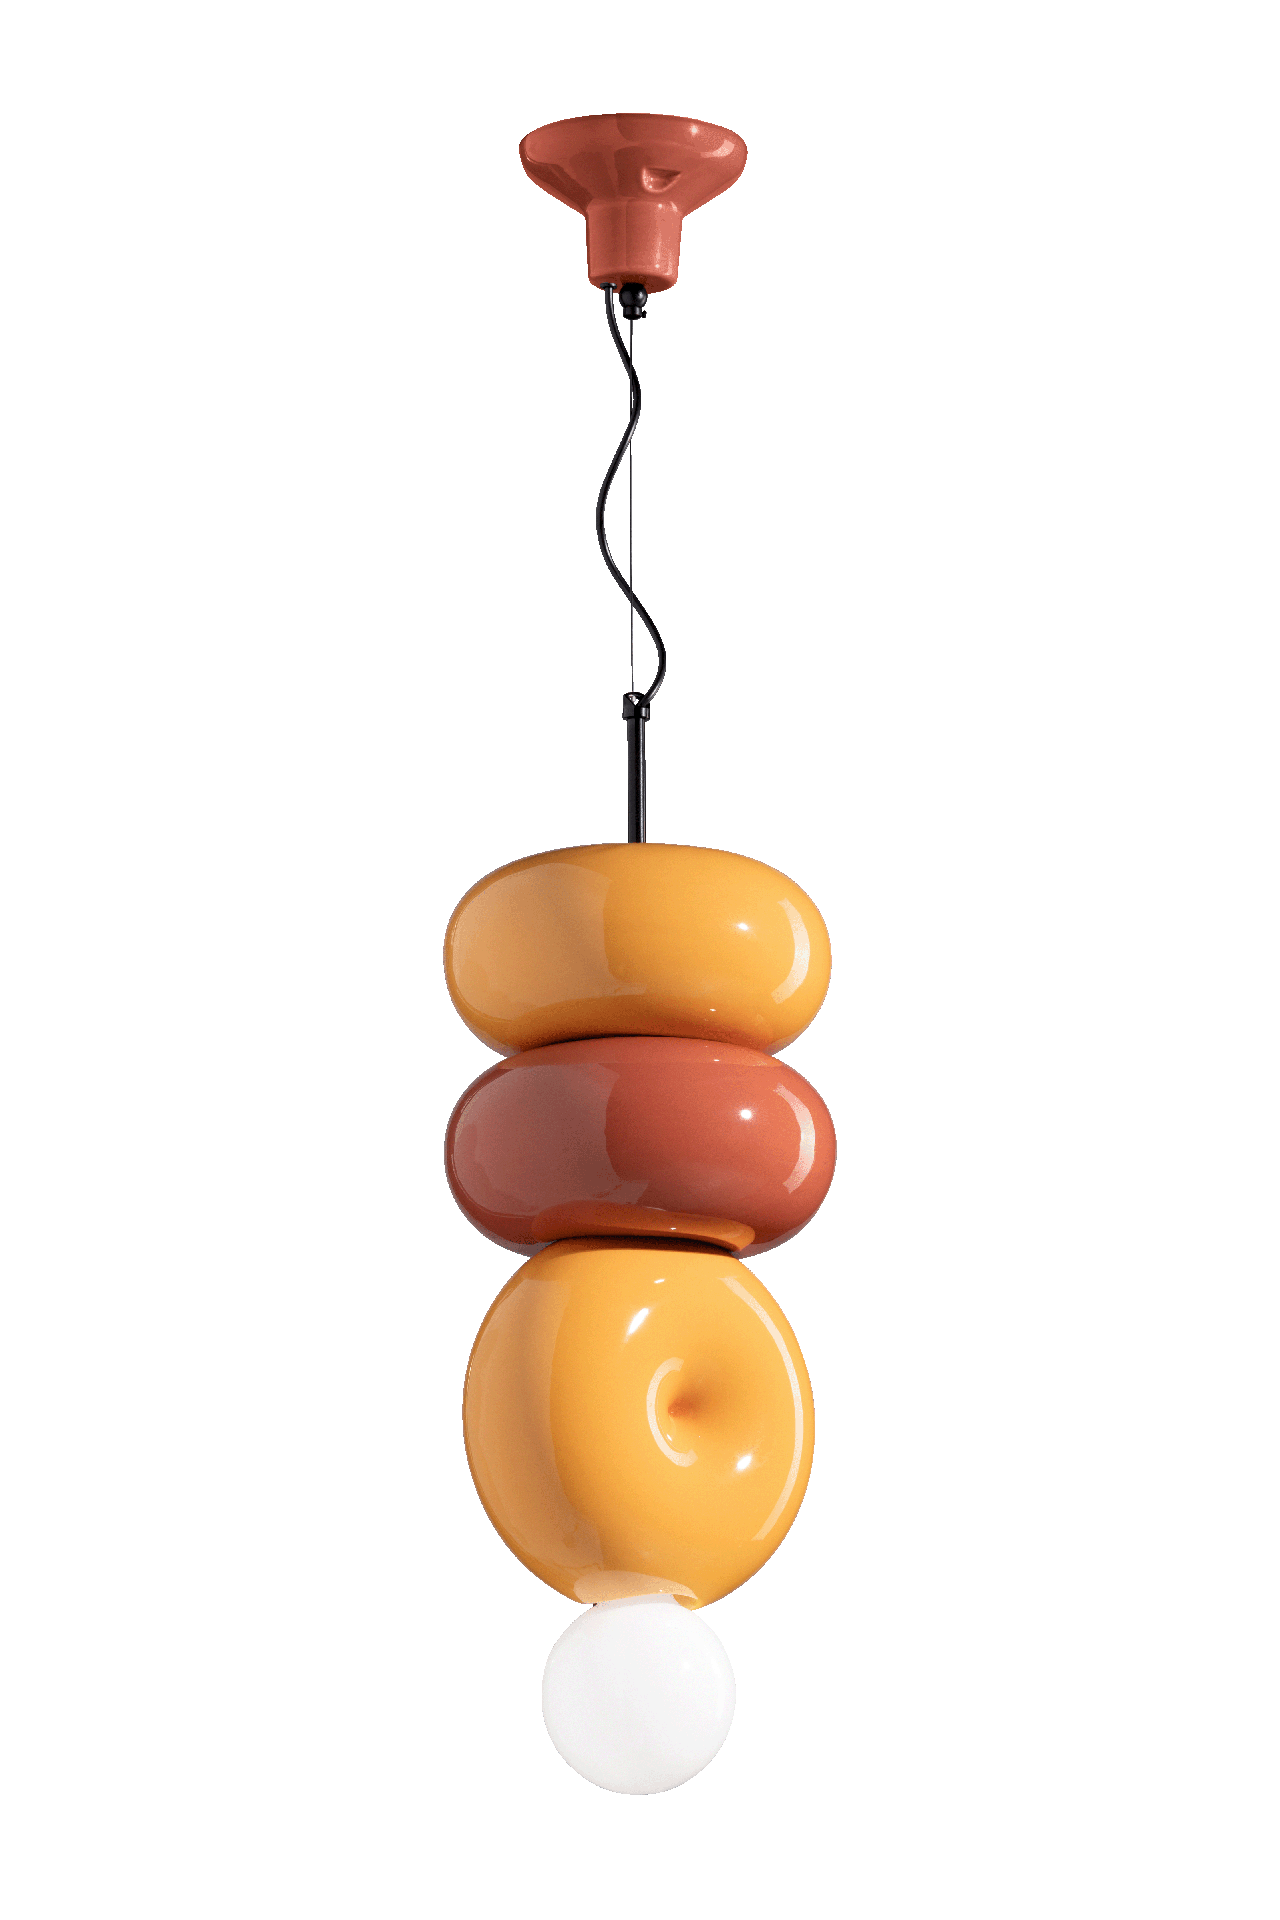 Vibrant Round pendant for home